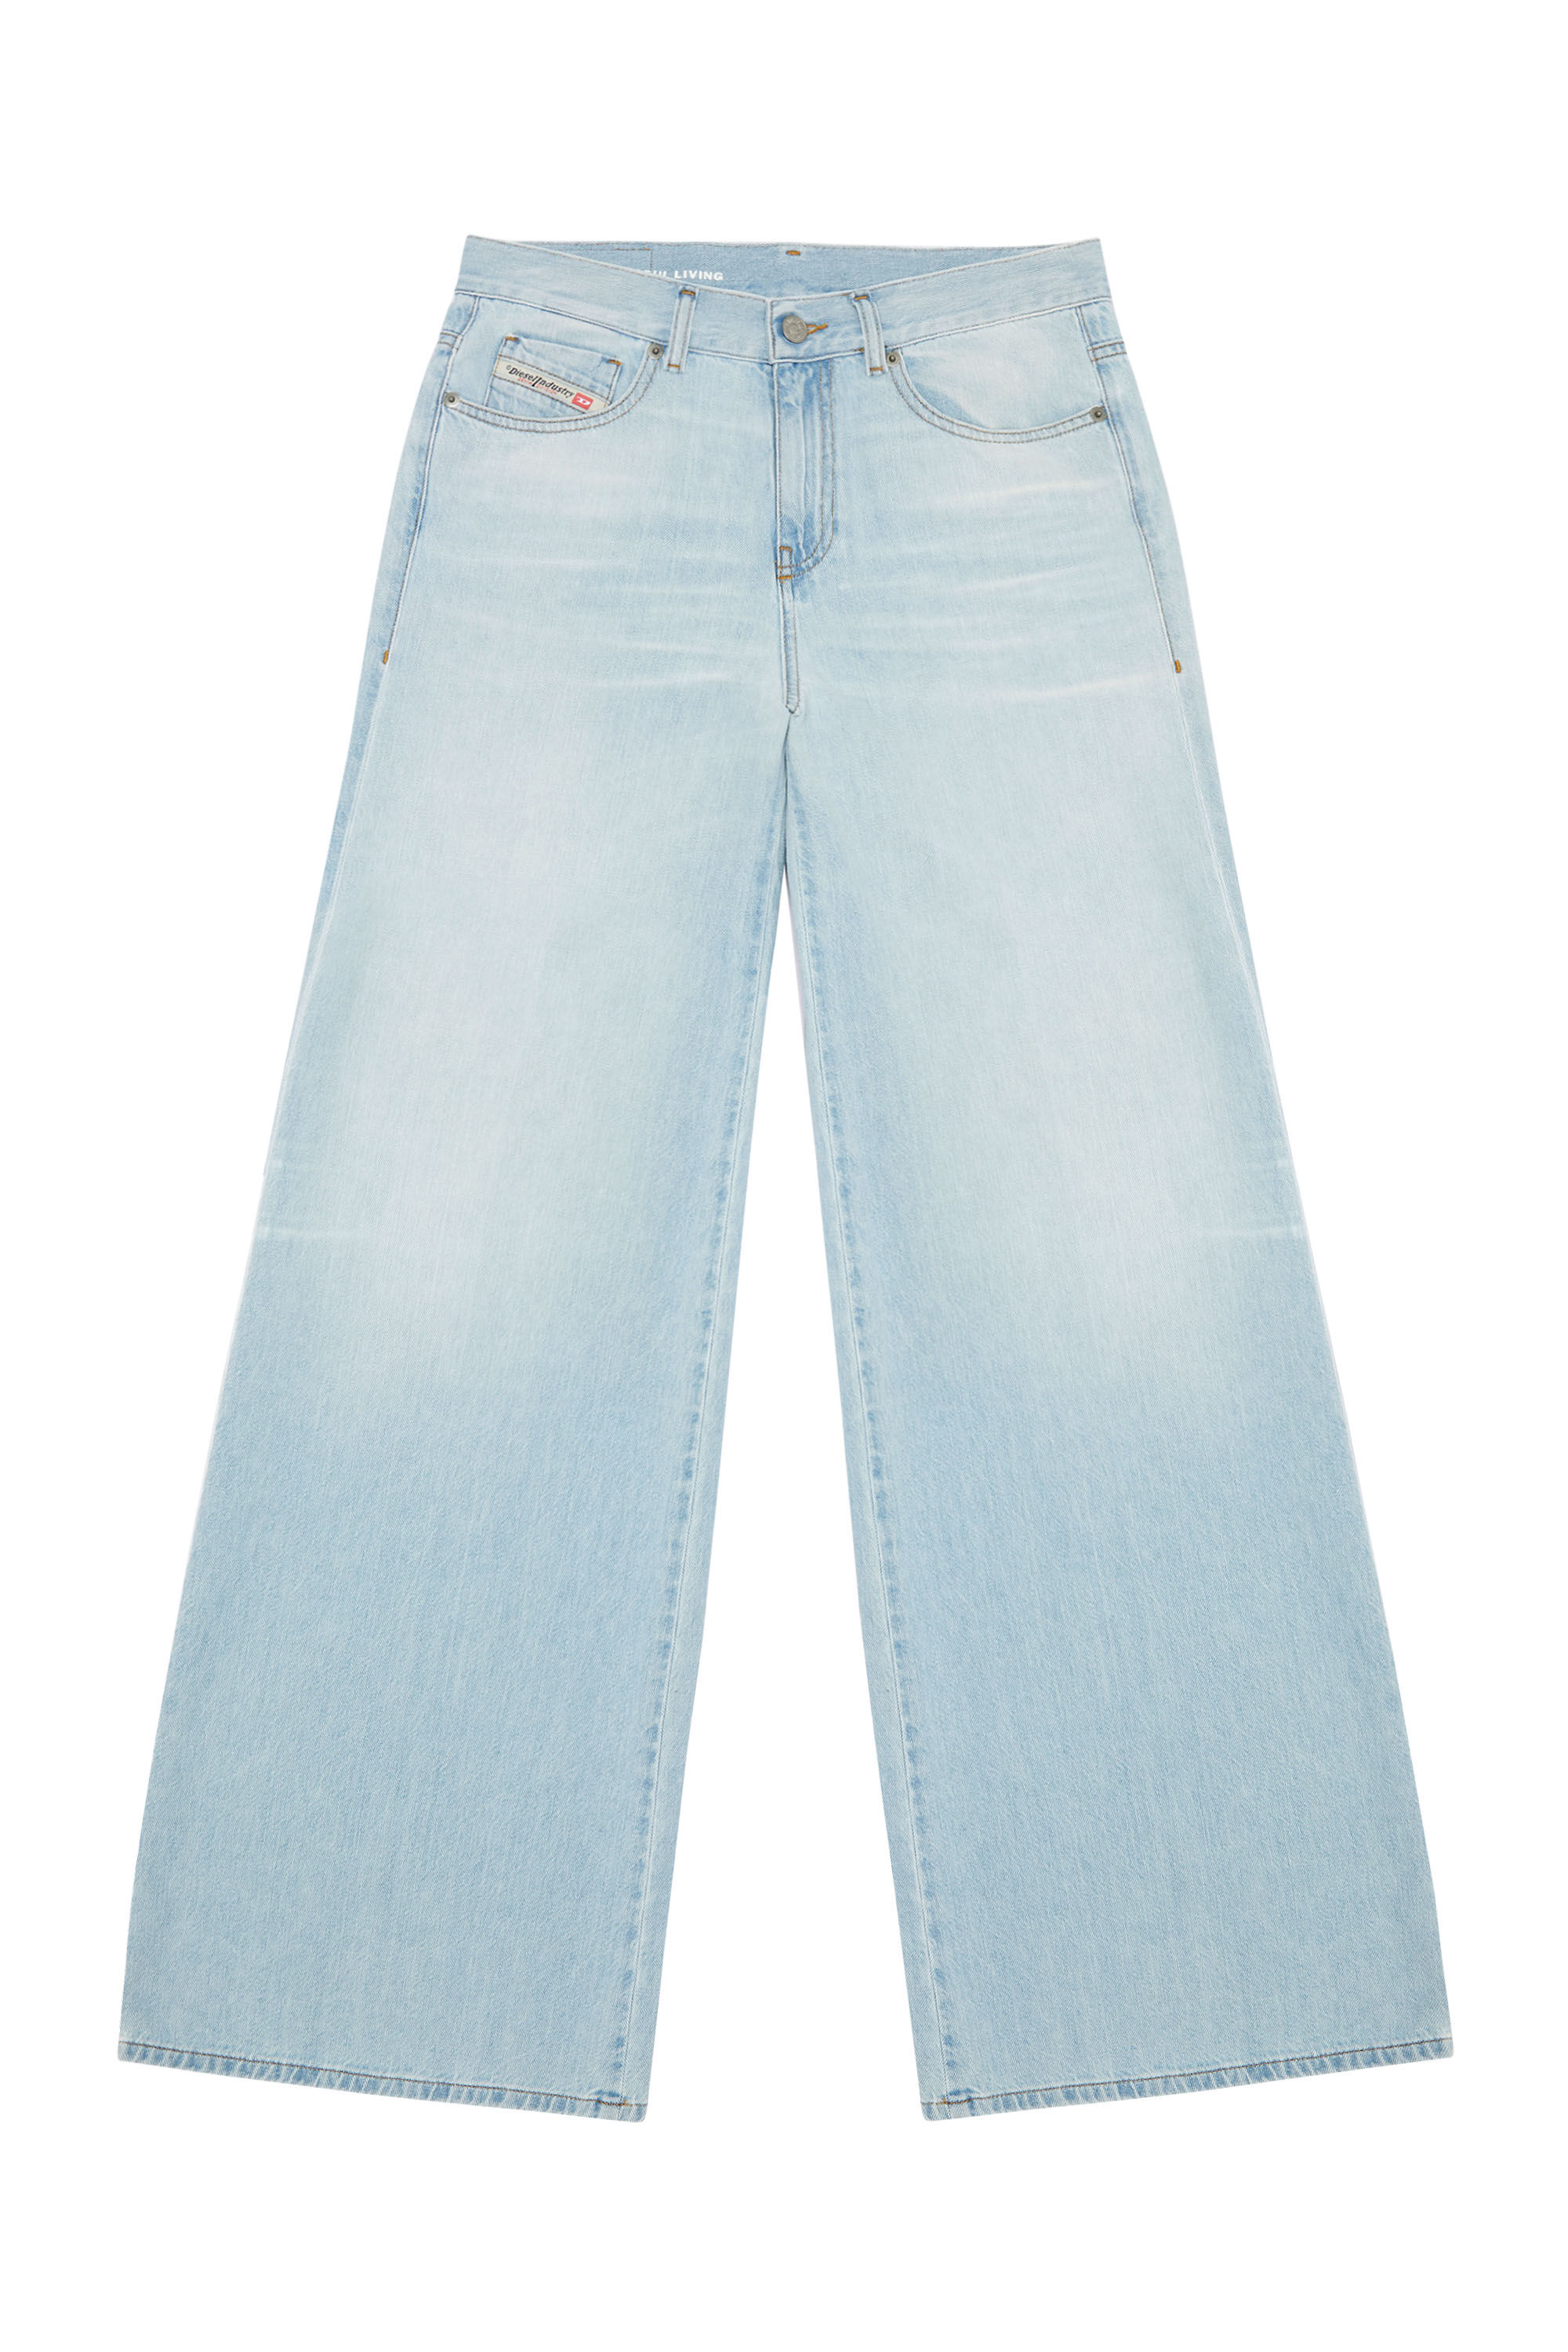 Women's Bootcut and Flare Jeans | Light blue | Diesel 1978 D-Akemi